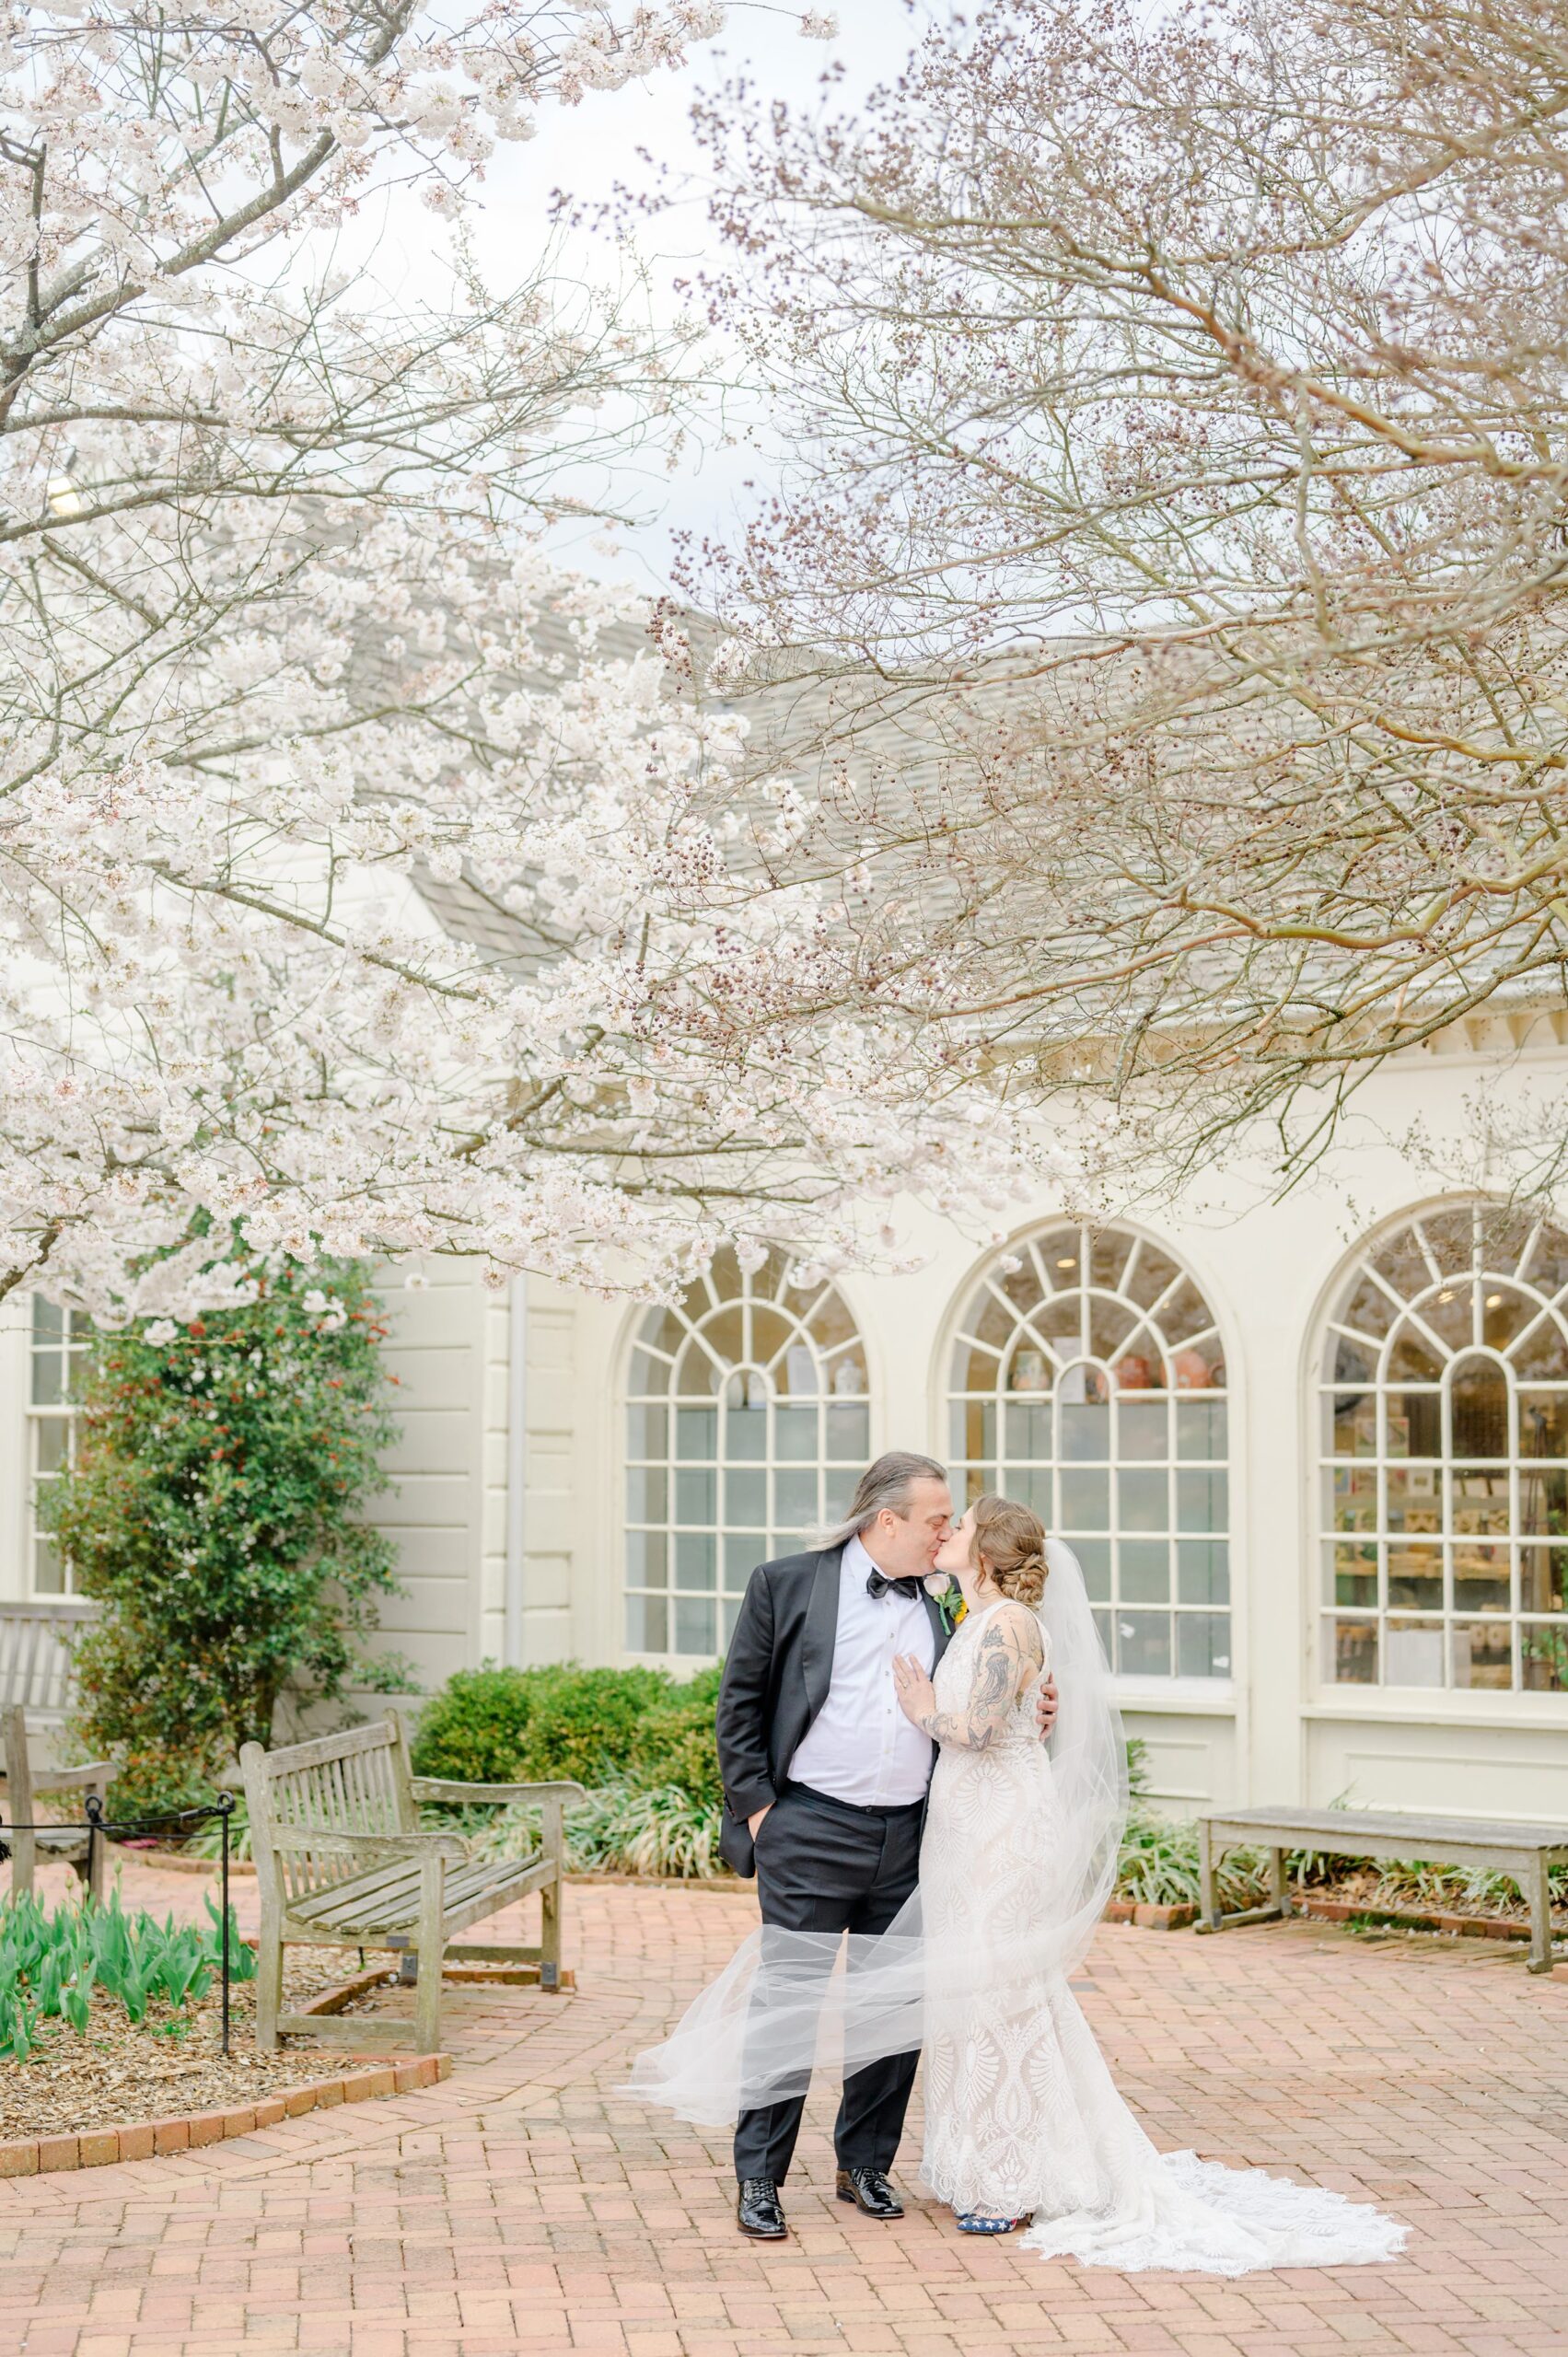 Spring Wedding at the Mount Vernon Inn Restaurant Wedding in Alexandria, Virginia photographed by Baltimore Photographer Cait Kramer Photography.